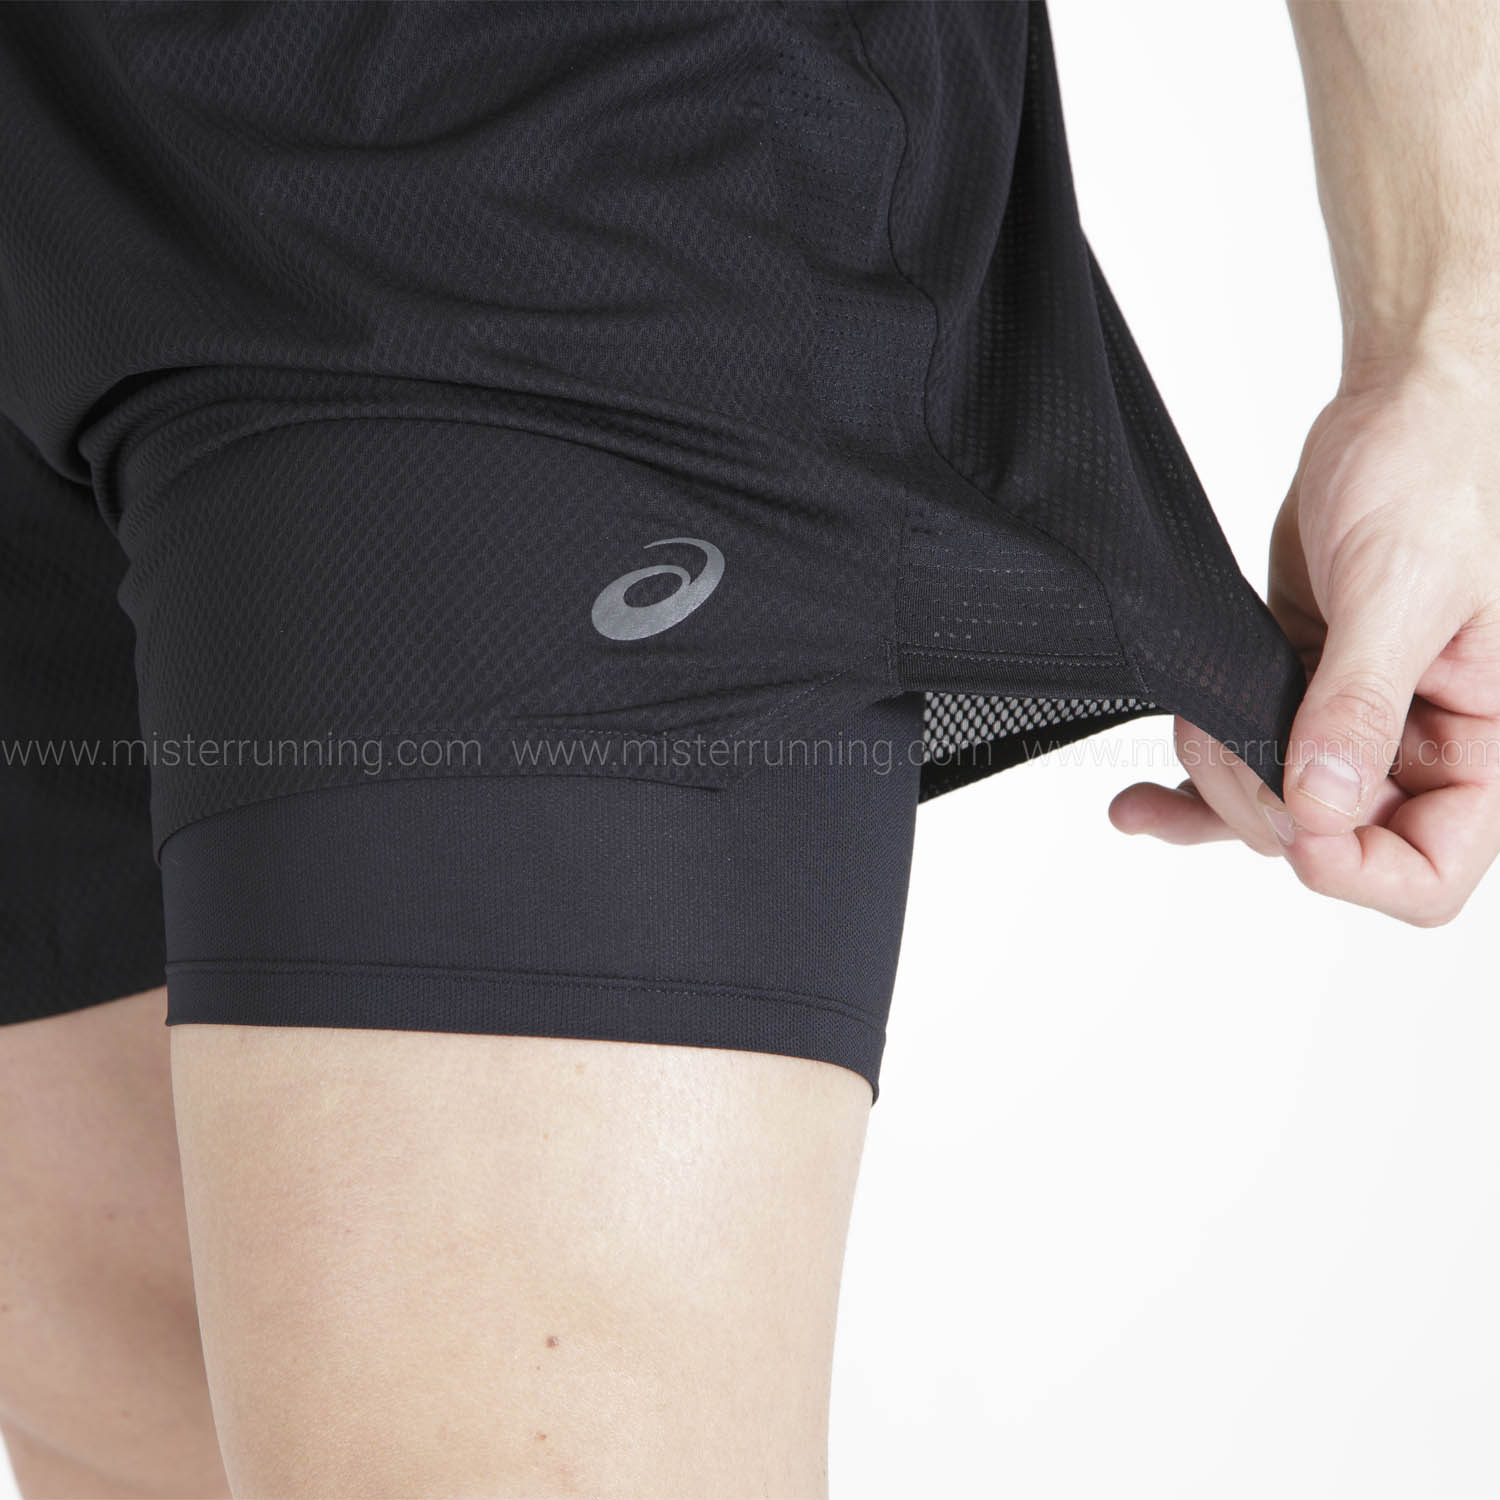 Asics Ventilate 2 in 1 5in Shorts - Performance Black